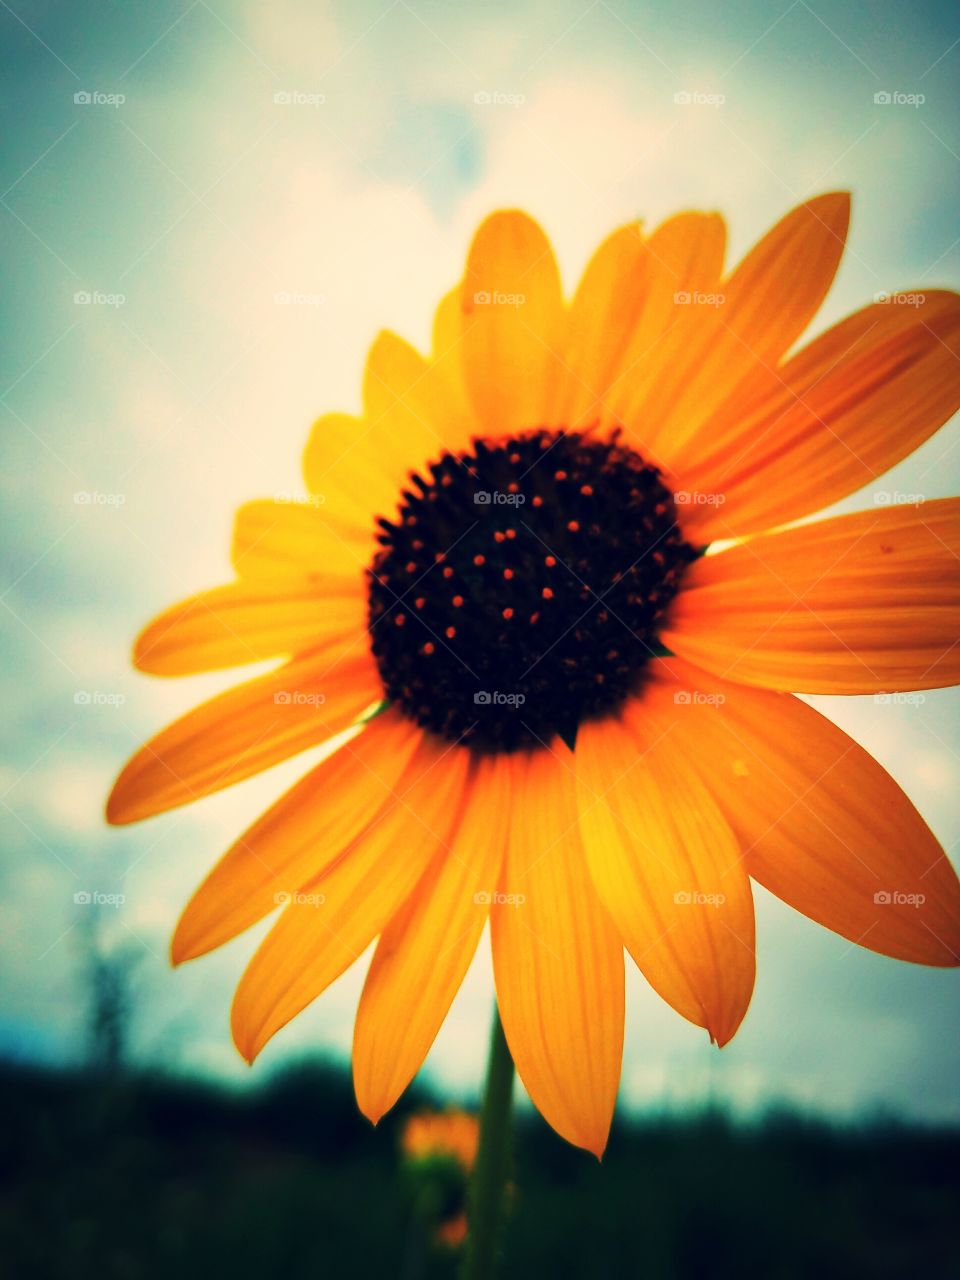 Sunflower, rays of blue